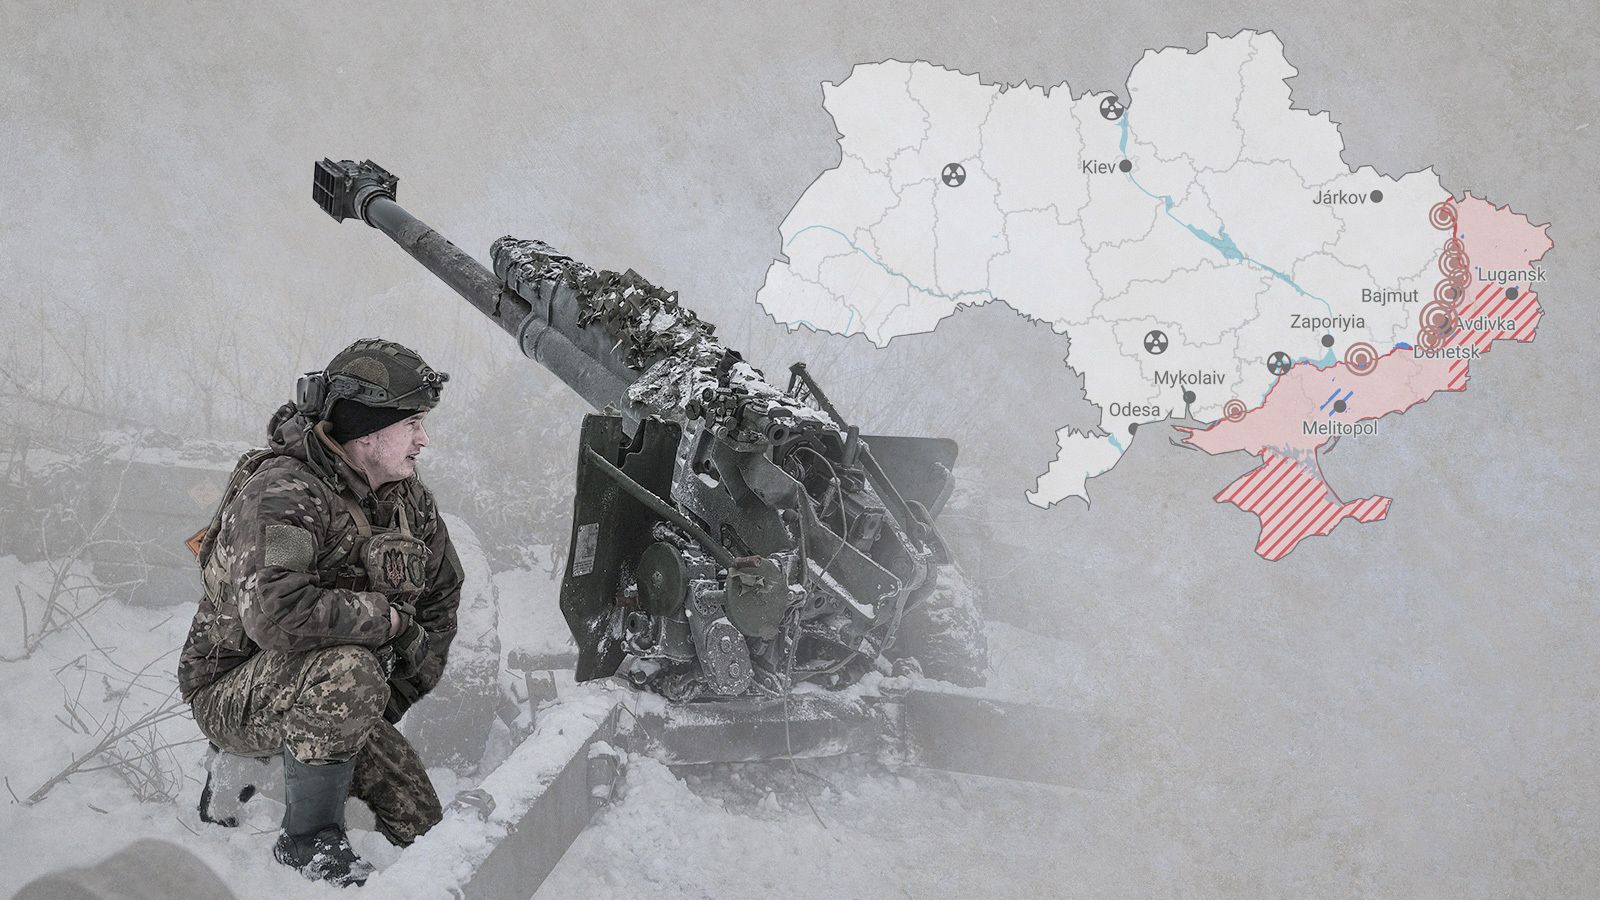 El mapa de la semana 99 de la guerra en Ucrania